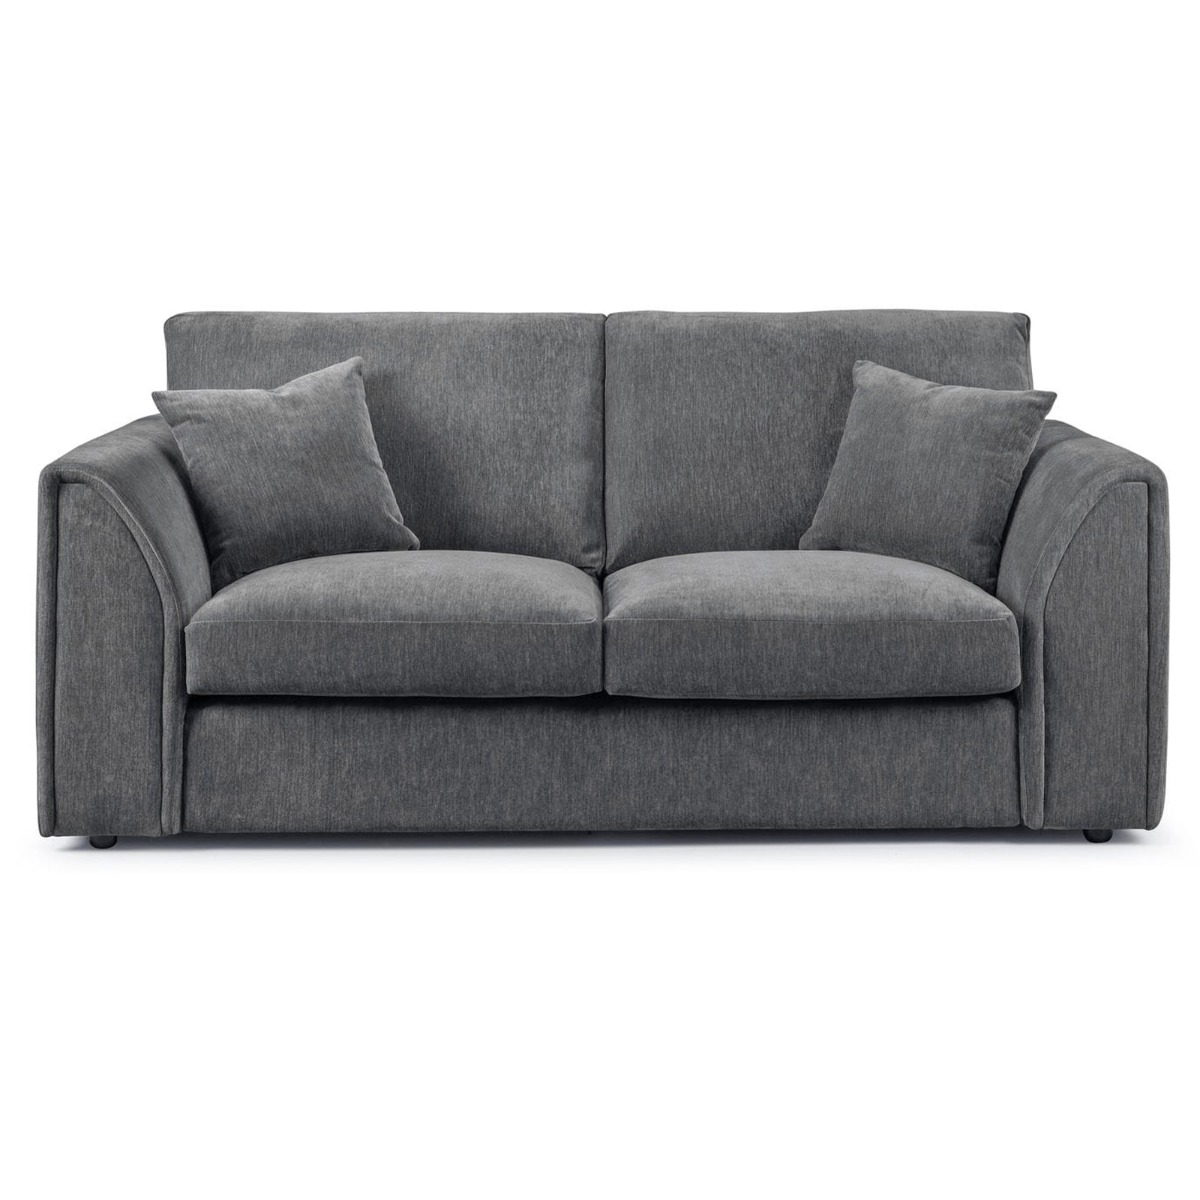 Barnaby Fabric 3 Seat Sofa in Charcoal